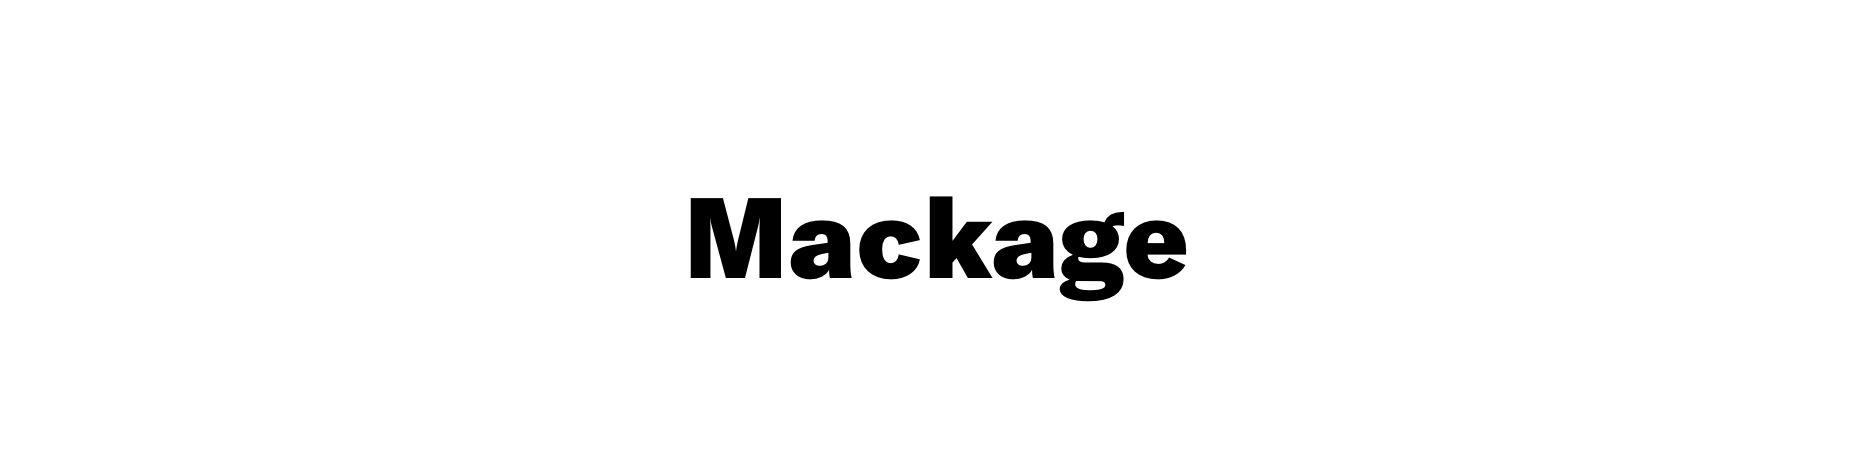 Mackage Logo - LogoDix